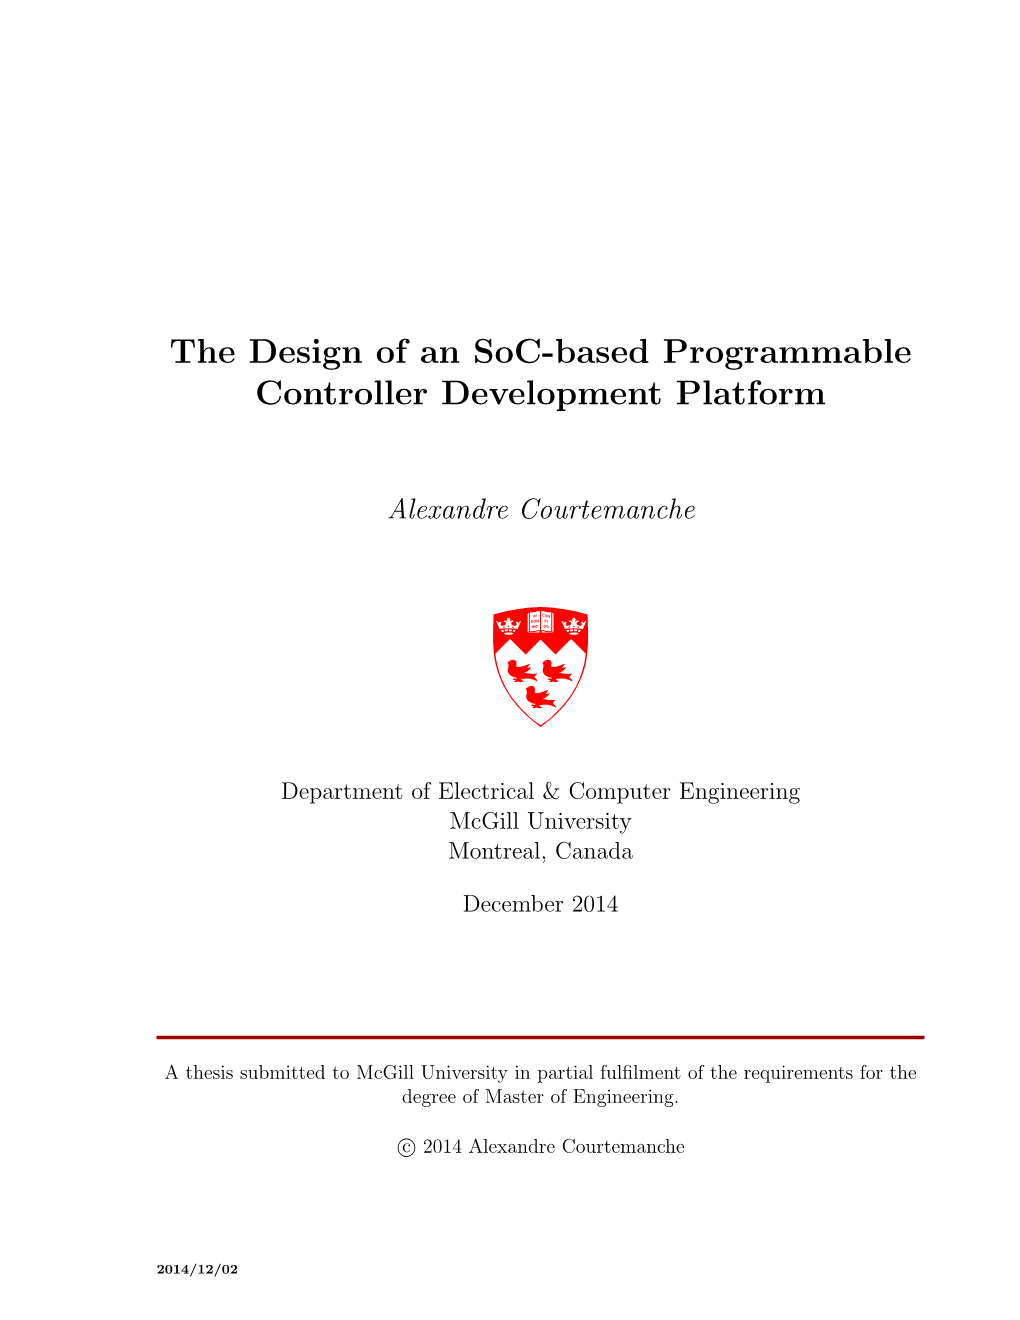 The Design of an Soc-Based Programmable Controller Development Platform